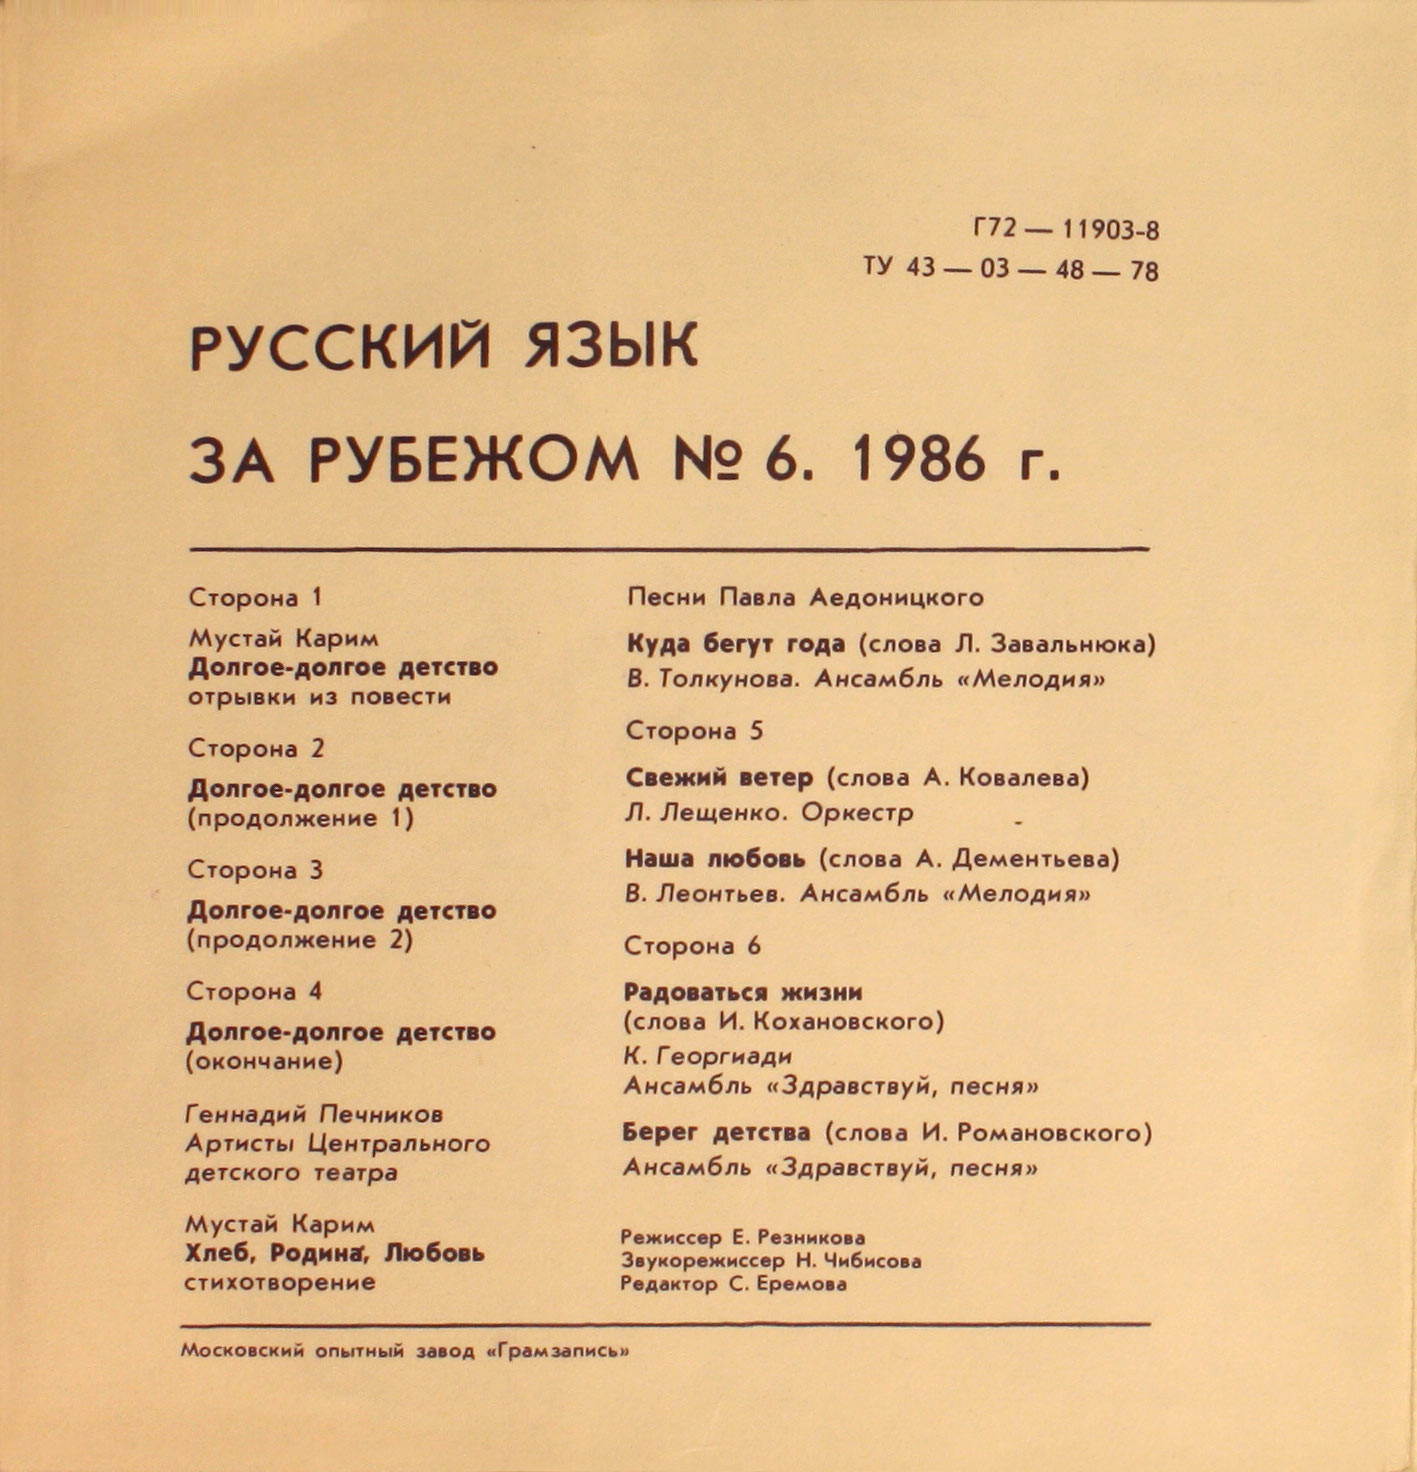 "РУССКИЙ ЯЗЫК ЗА РУБЕЖОМ", № 6 - 1986